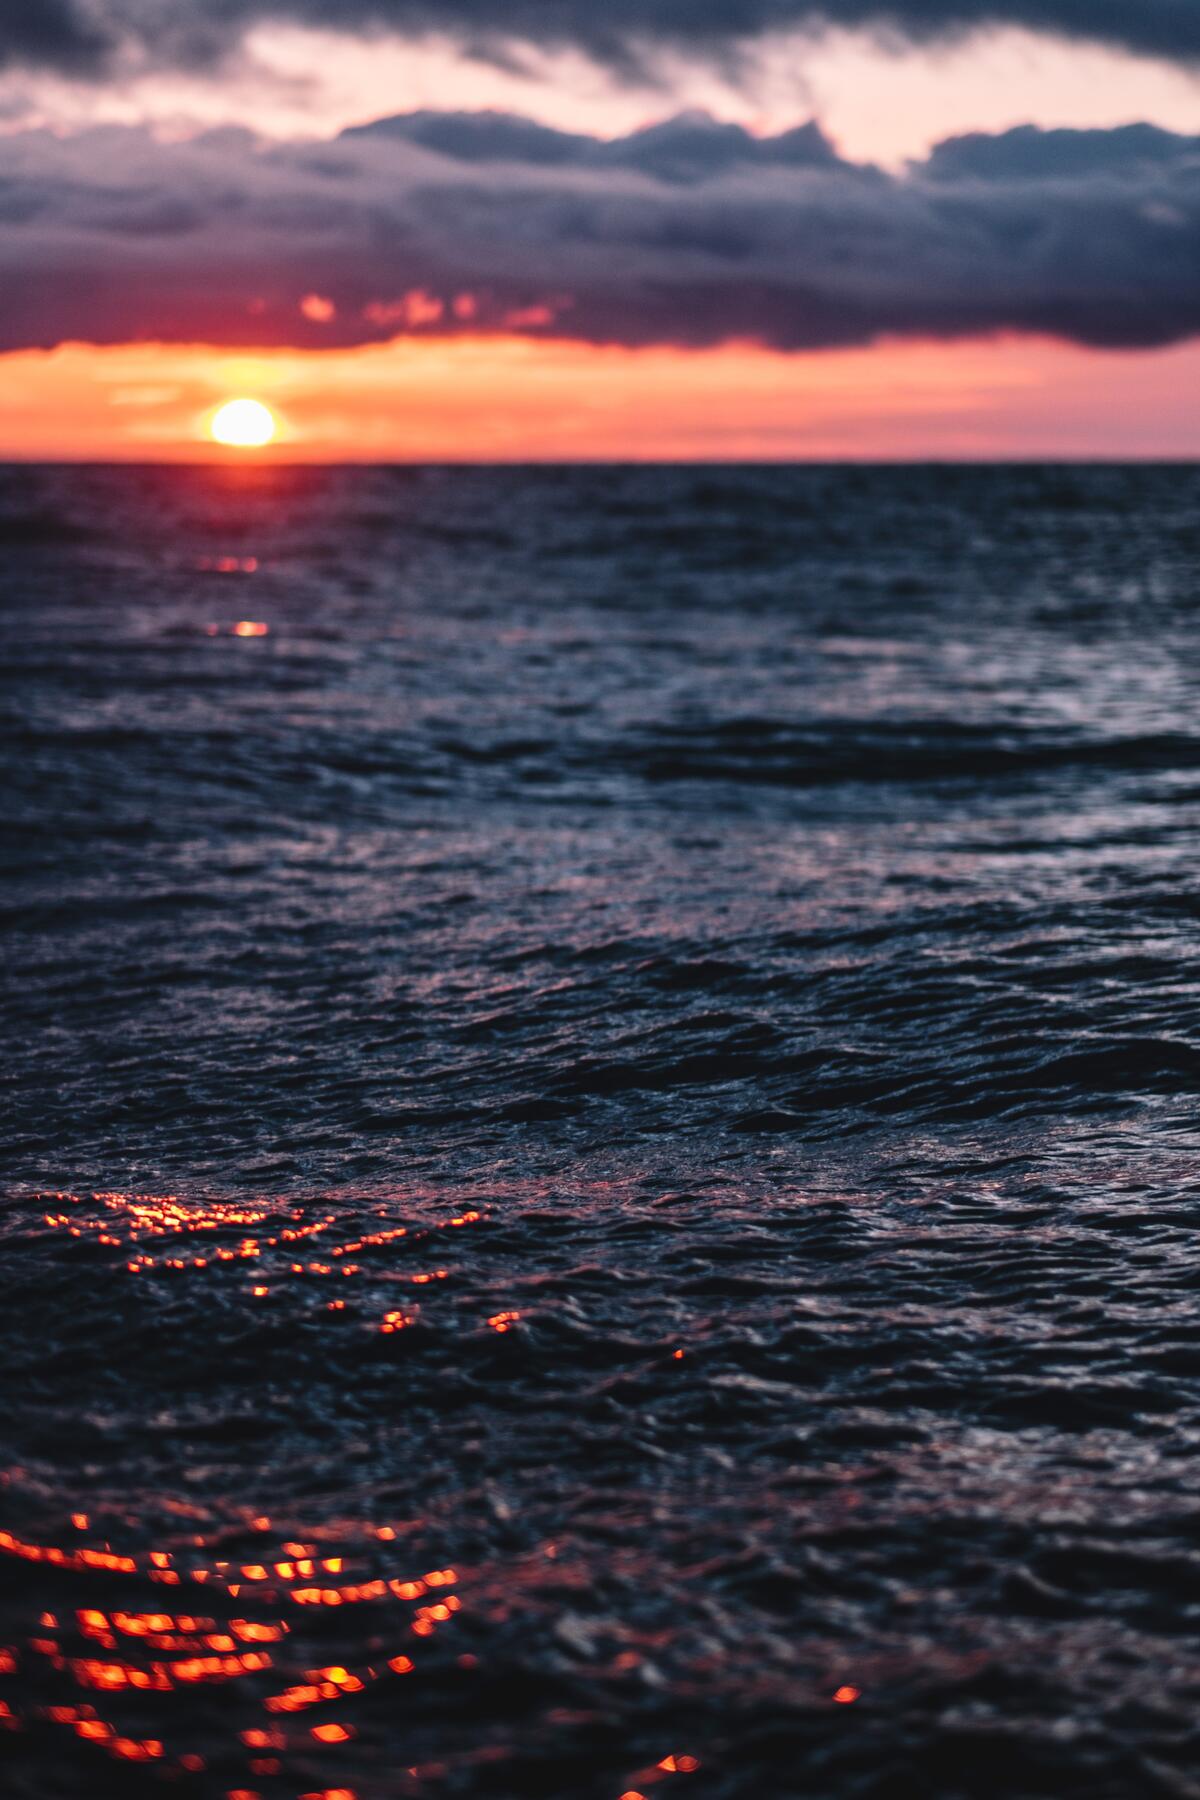 A fiery sunset on a rippling sea